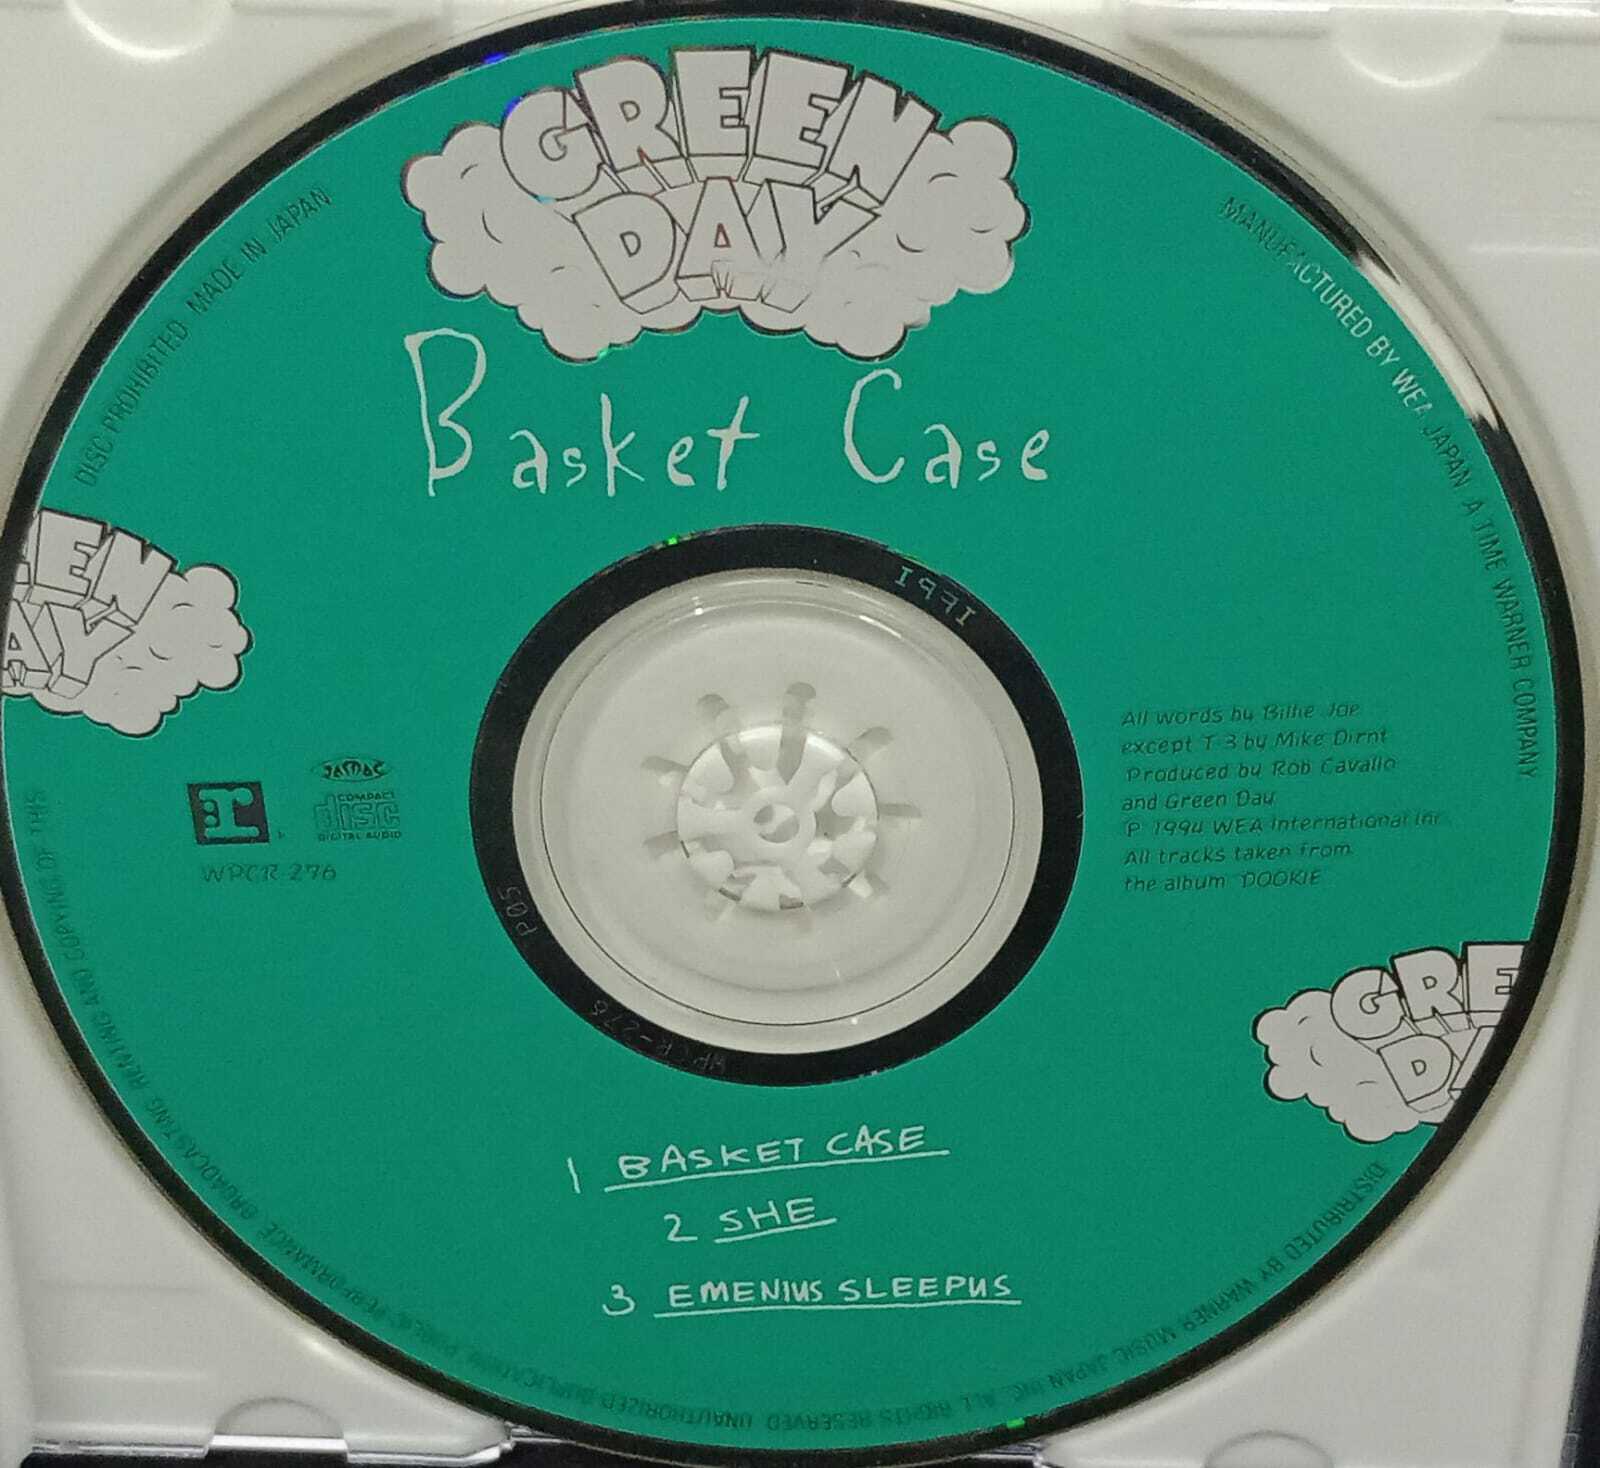 CD - Green Day - Basket Case (Japan)